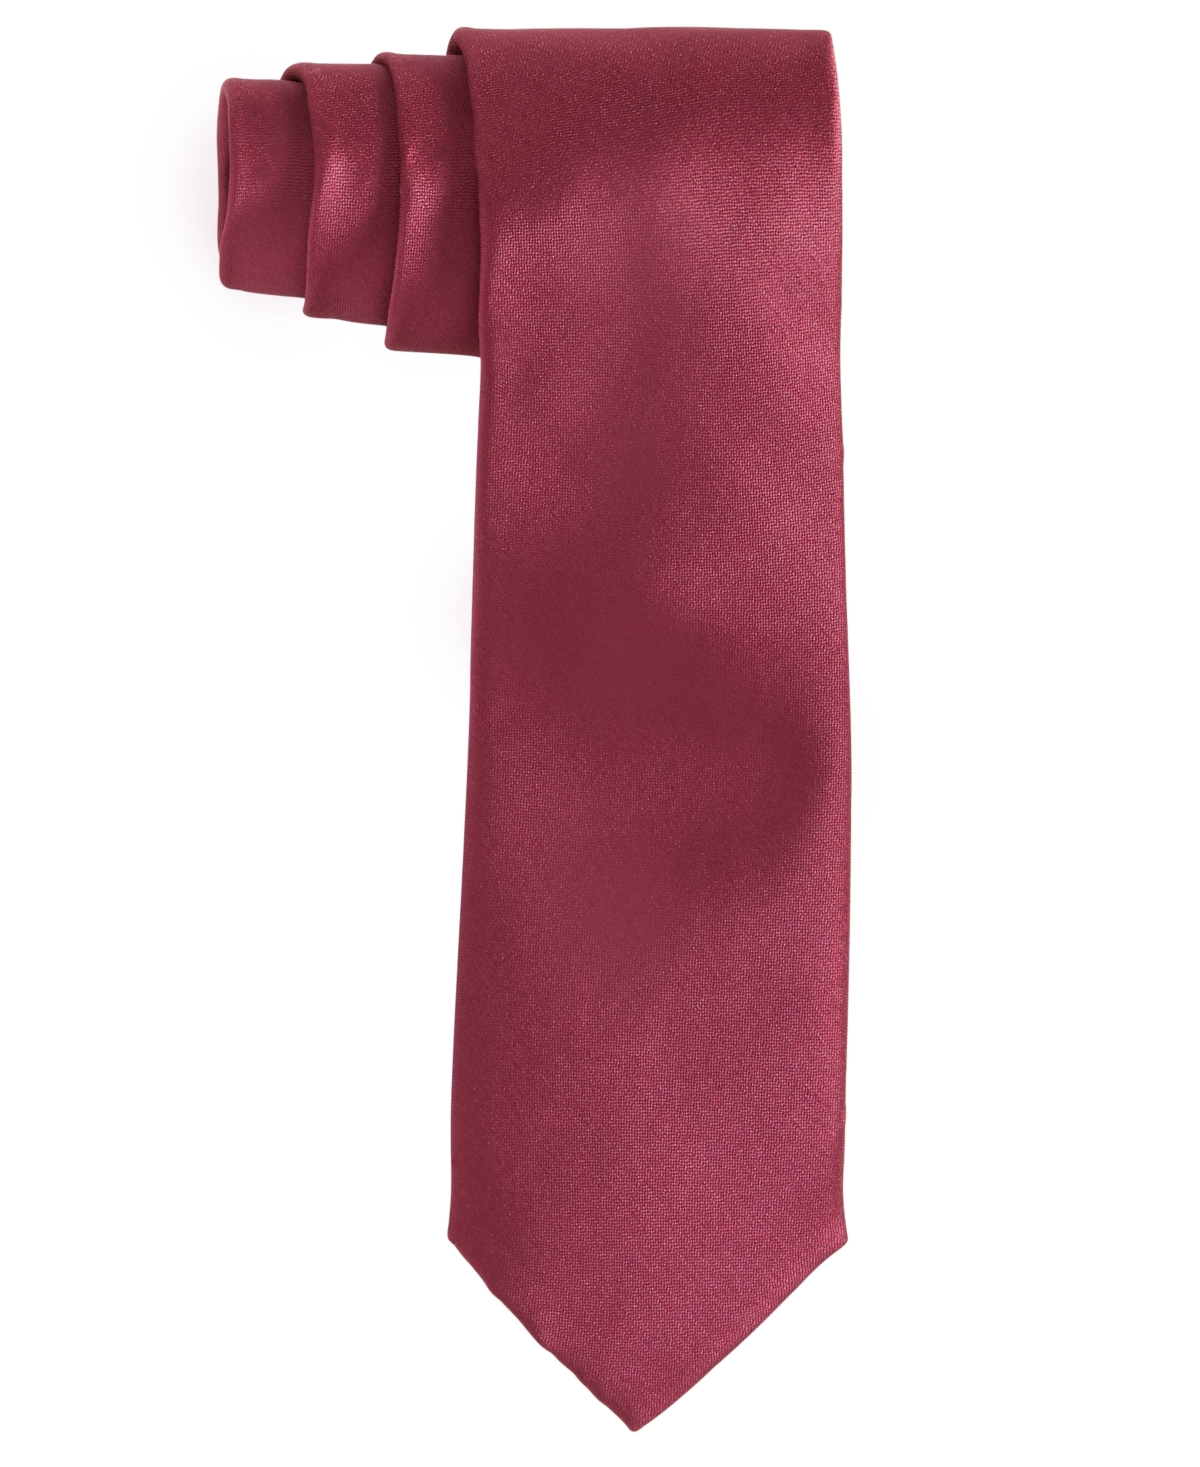 Men's Solid Texture Slim Tie, Created for Macy's - Fuschia